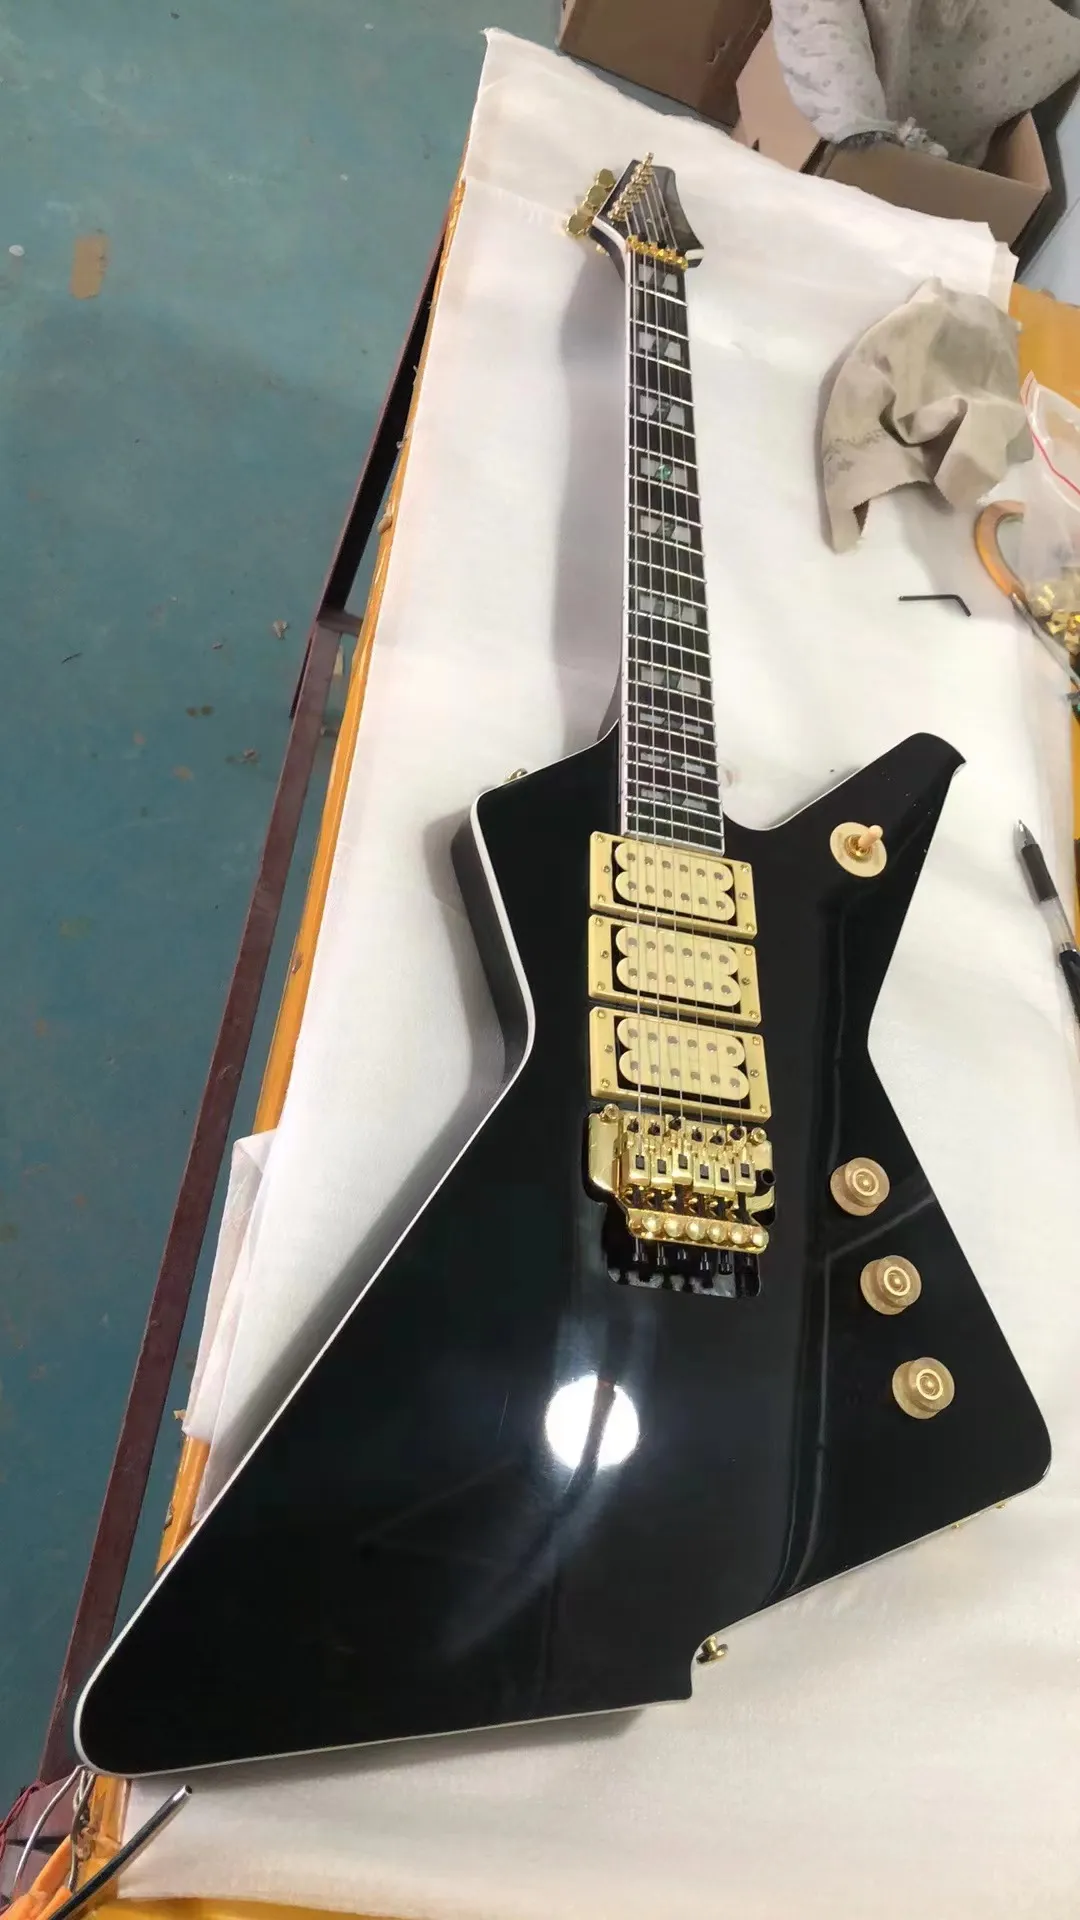 Seltene Destroyer Black Phil Collen E-Gitarre Floyd Rose Tremolo Bridge Gold Hardware Abalone Pearl Block Inlay 3 Pickups Finish Schwarz